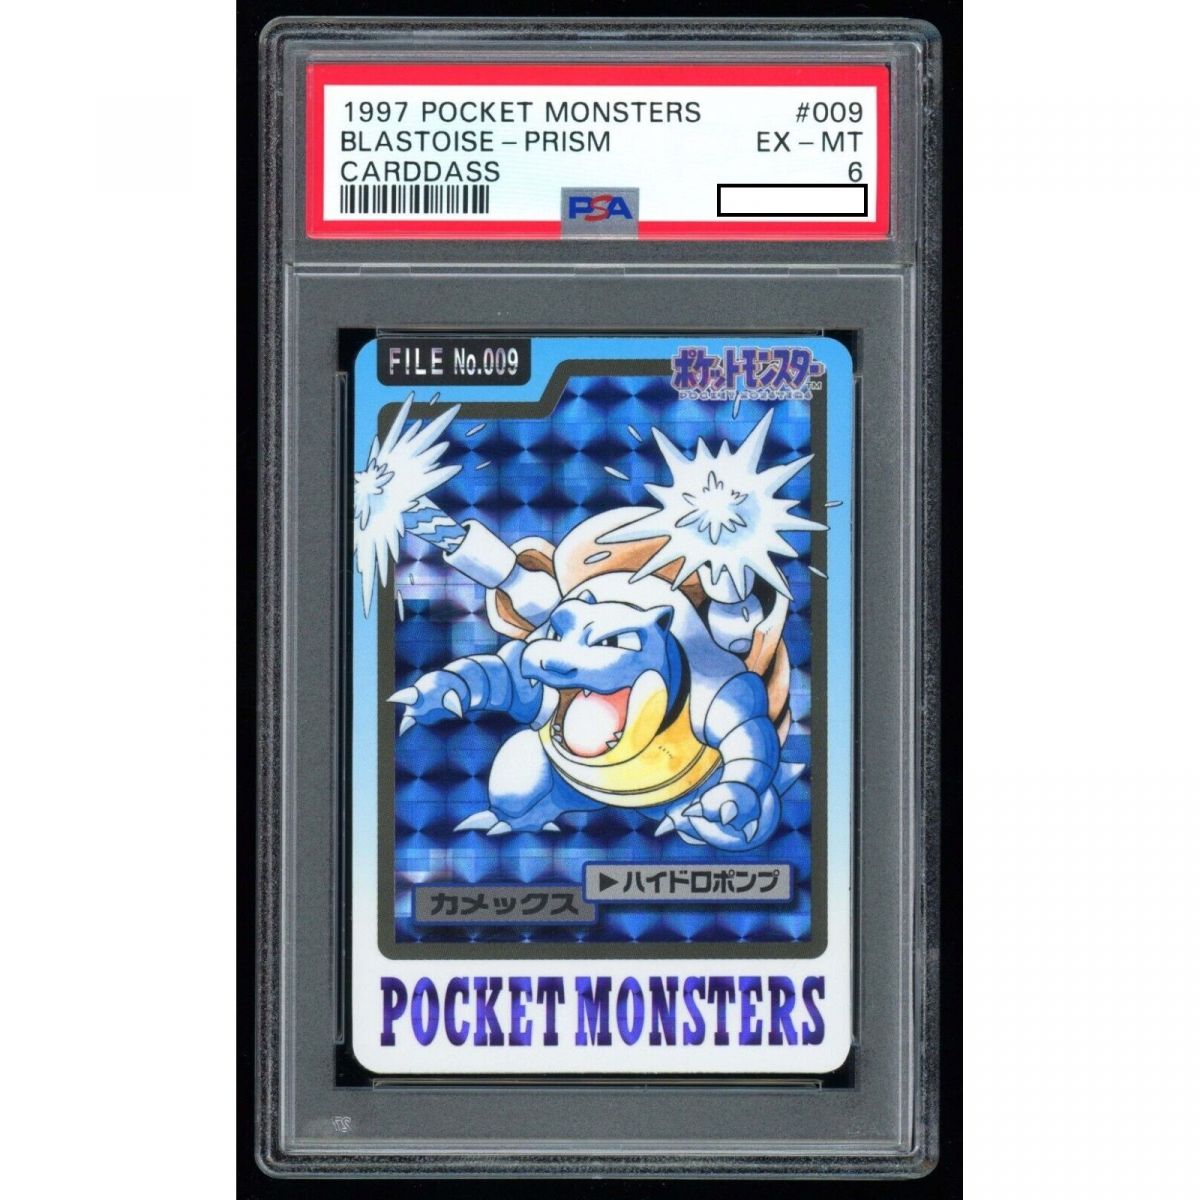 Pokémon - Graded Card - Blastoise 009 Prism Pocket Monster Carddass 1997 Japanese [PSA 6 - EX-MT]